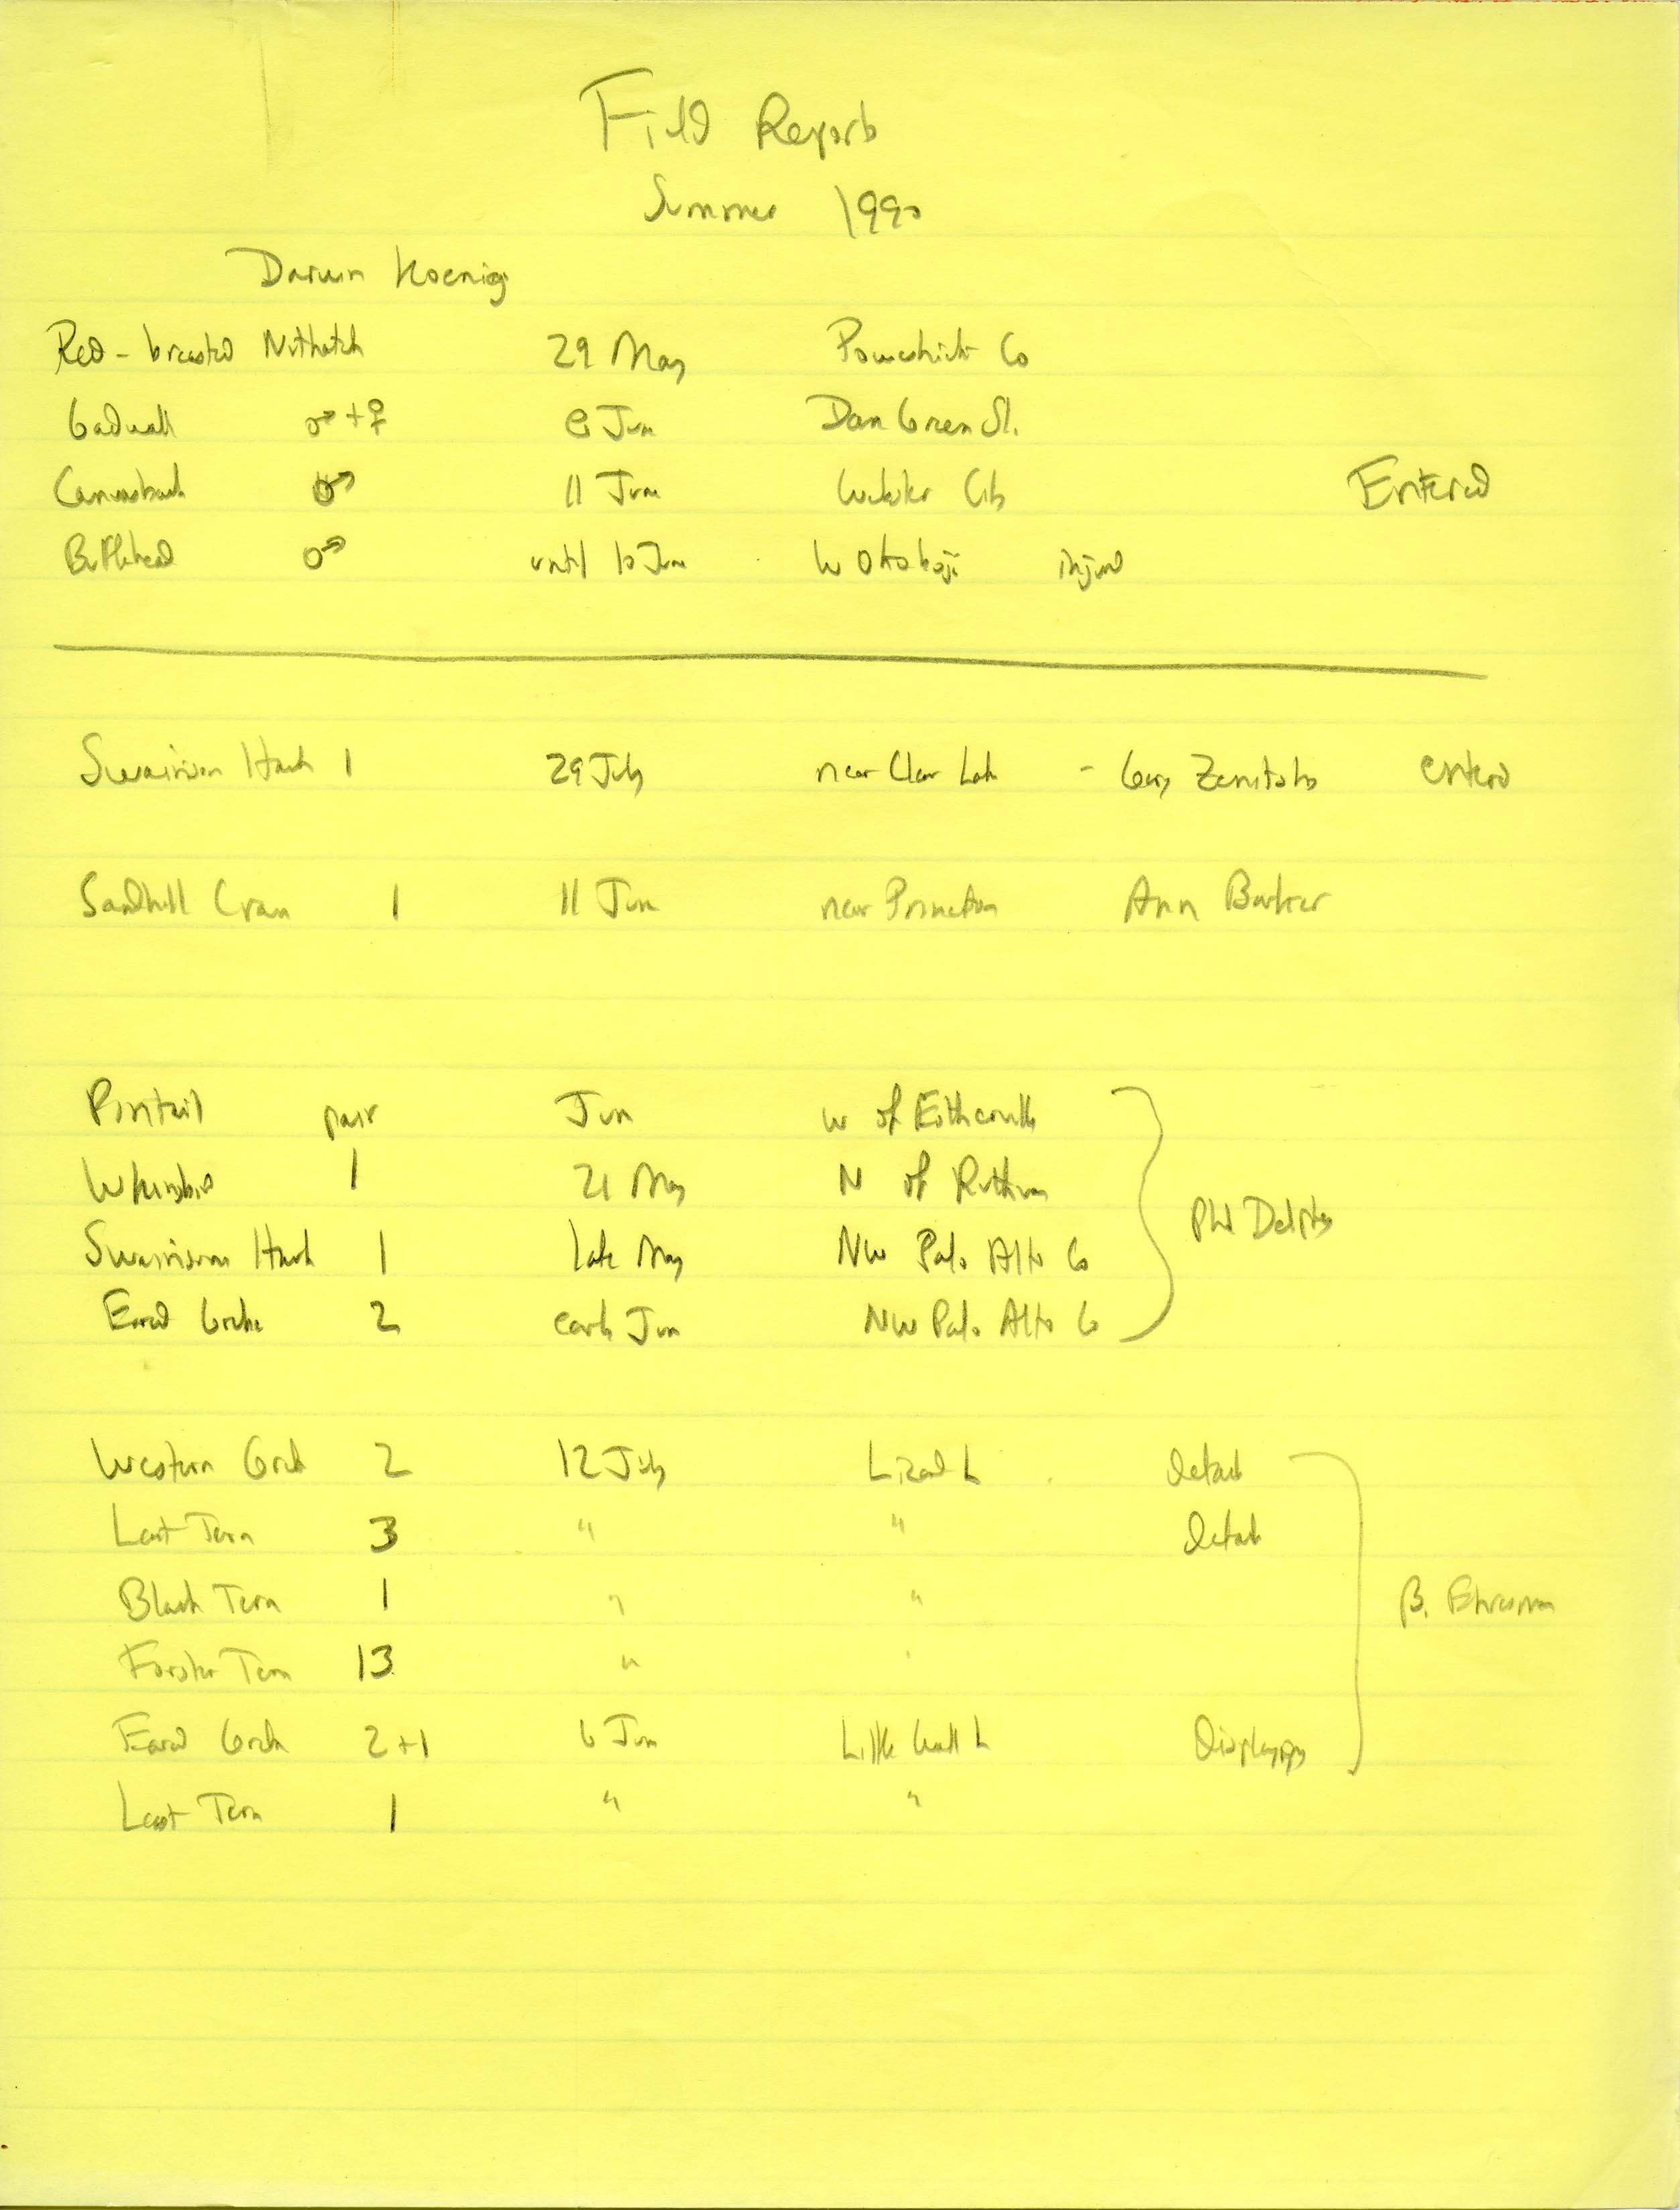 Field reports, Darwin Koenig, summer 1990